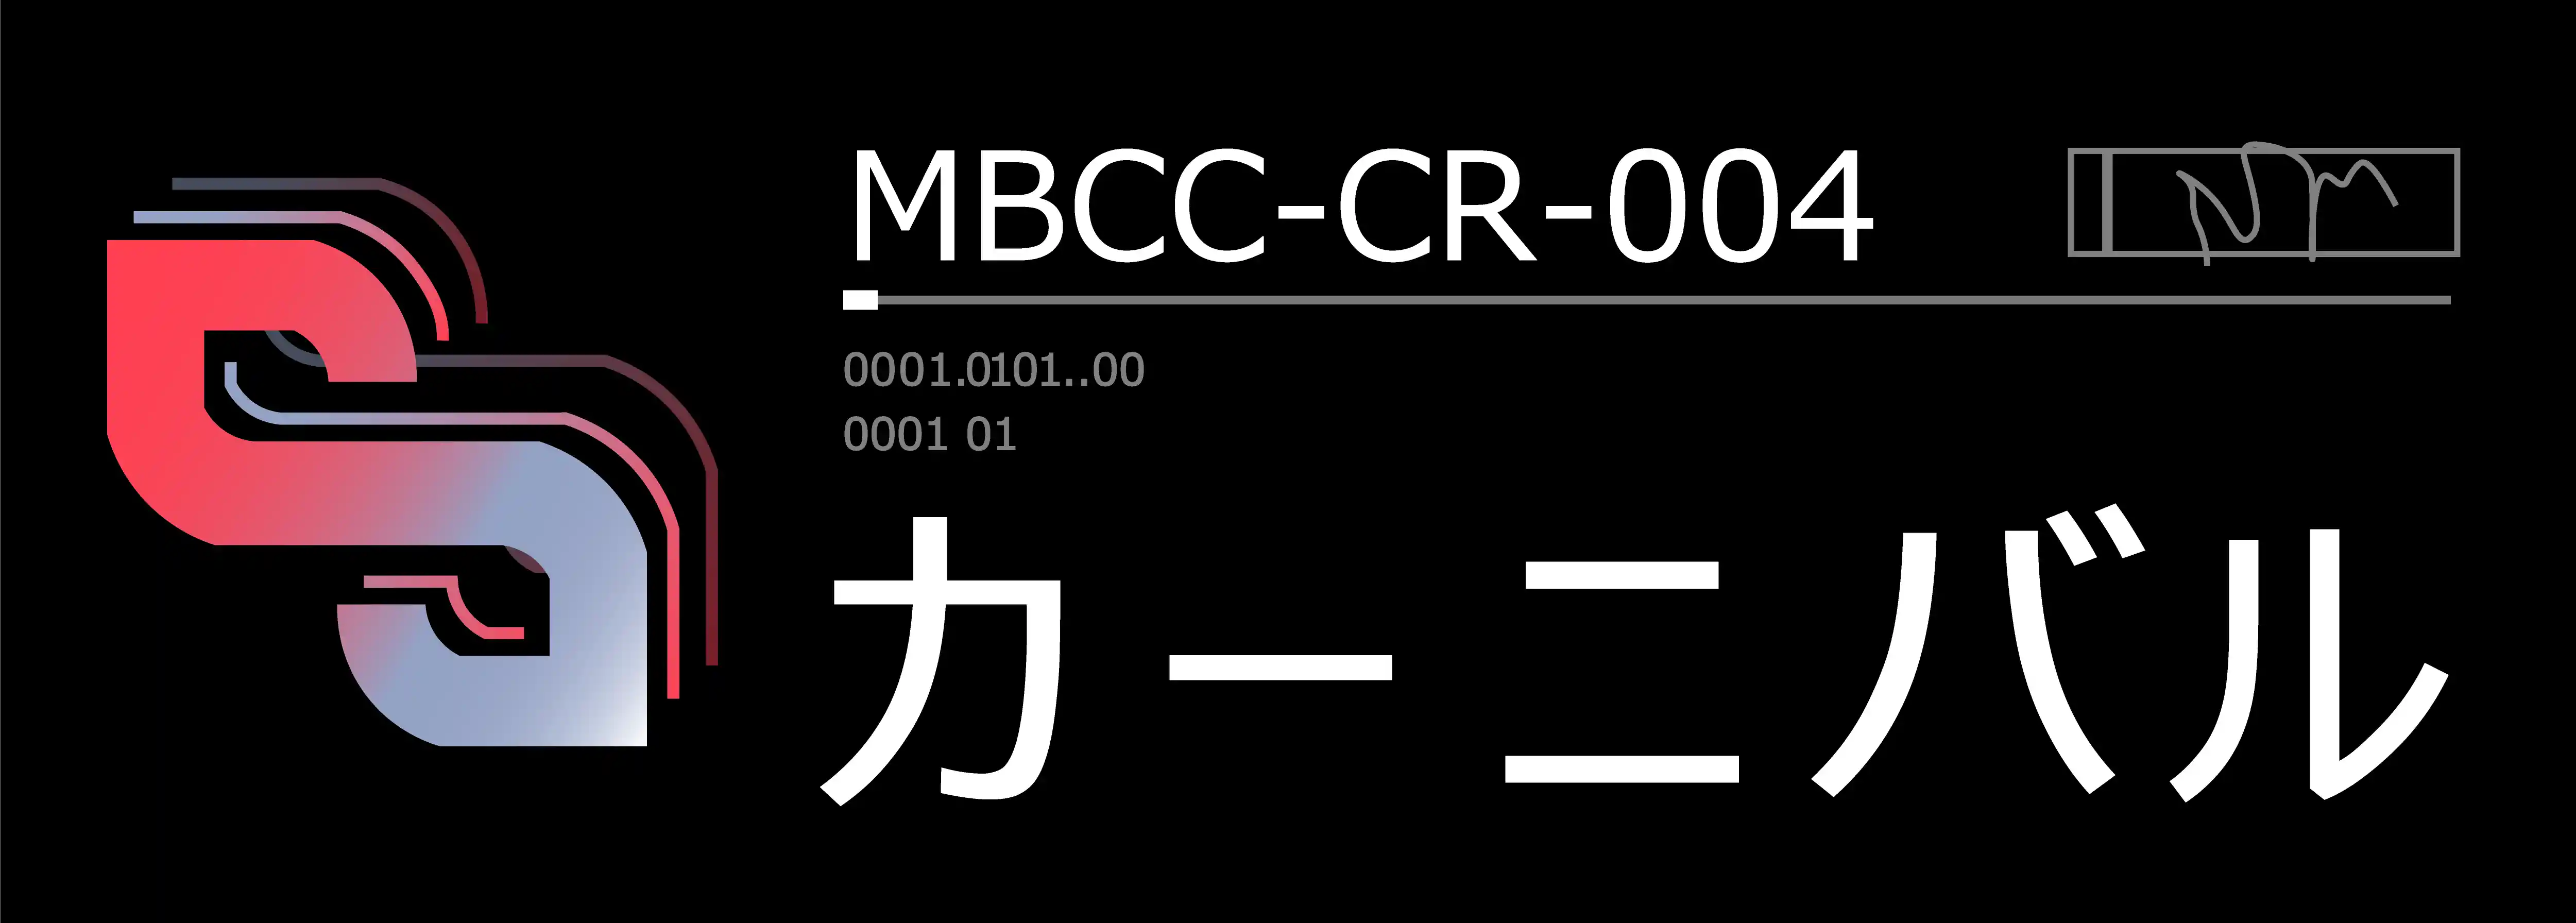 MBCC-CR-004.png